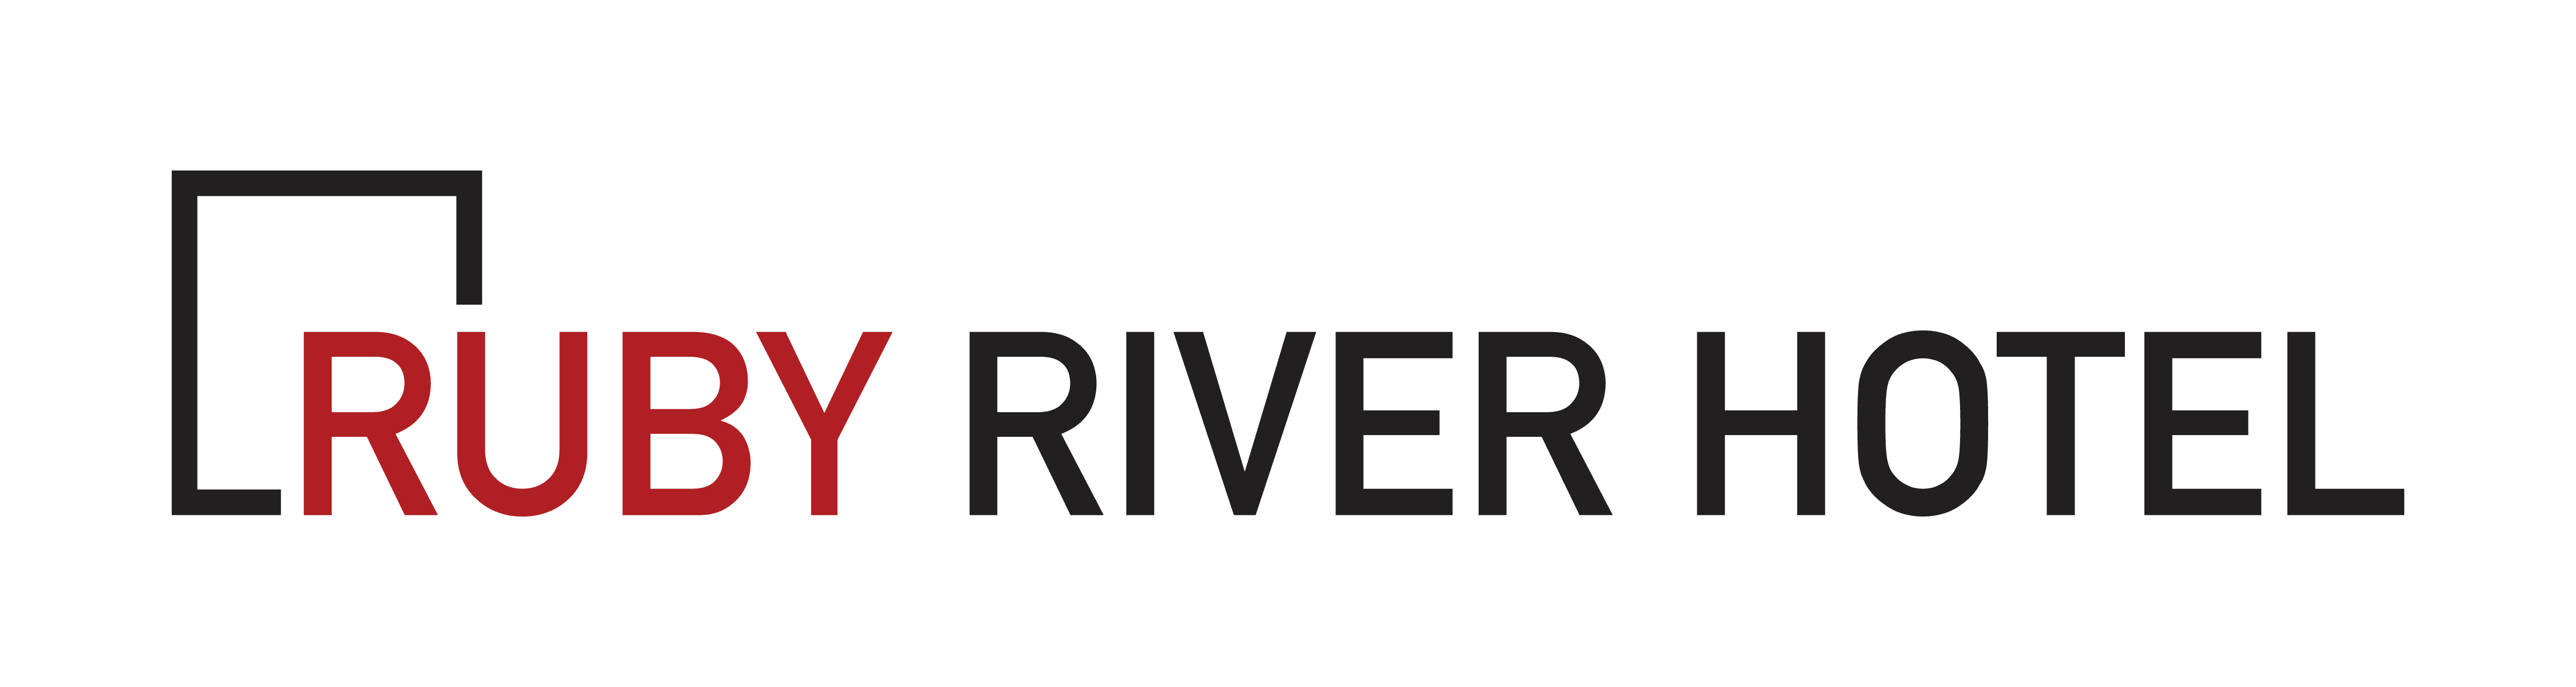 Ruby River Hotel Logo